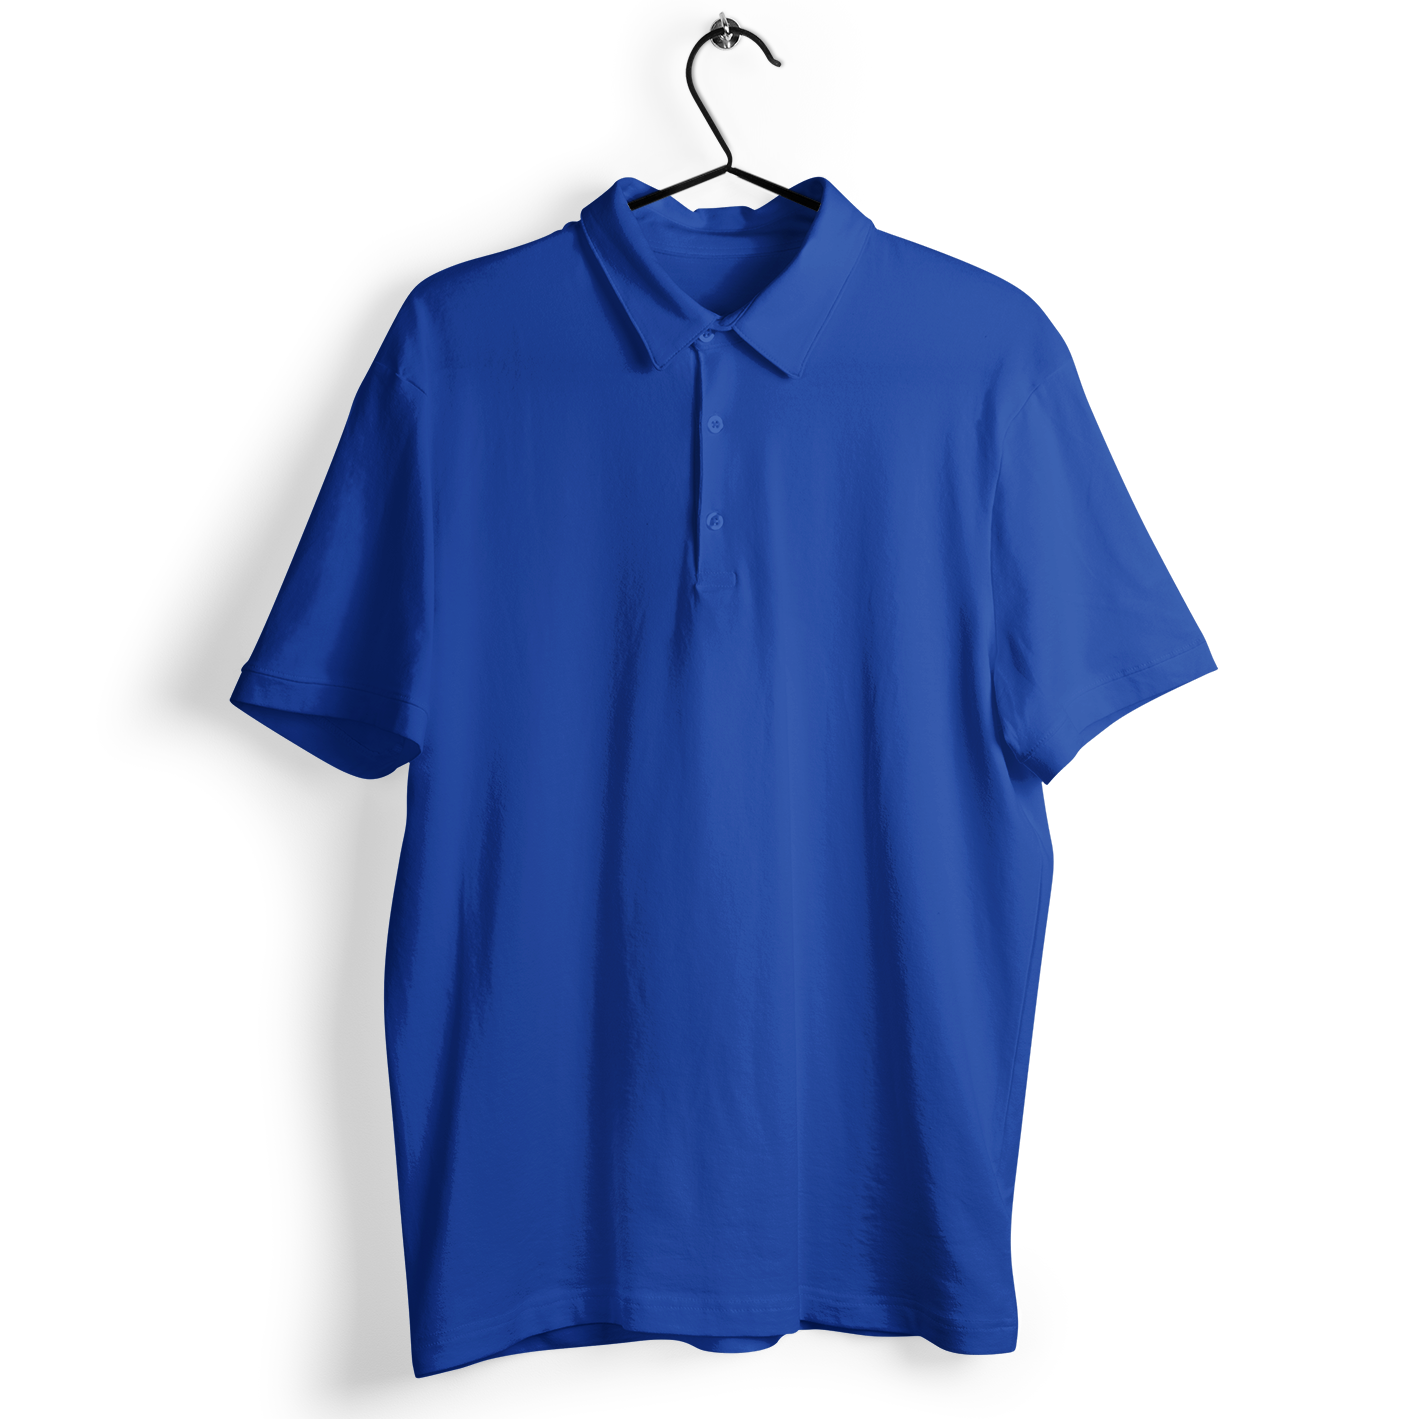 Royal Blue Polo T-shirt The Banyan Tee